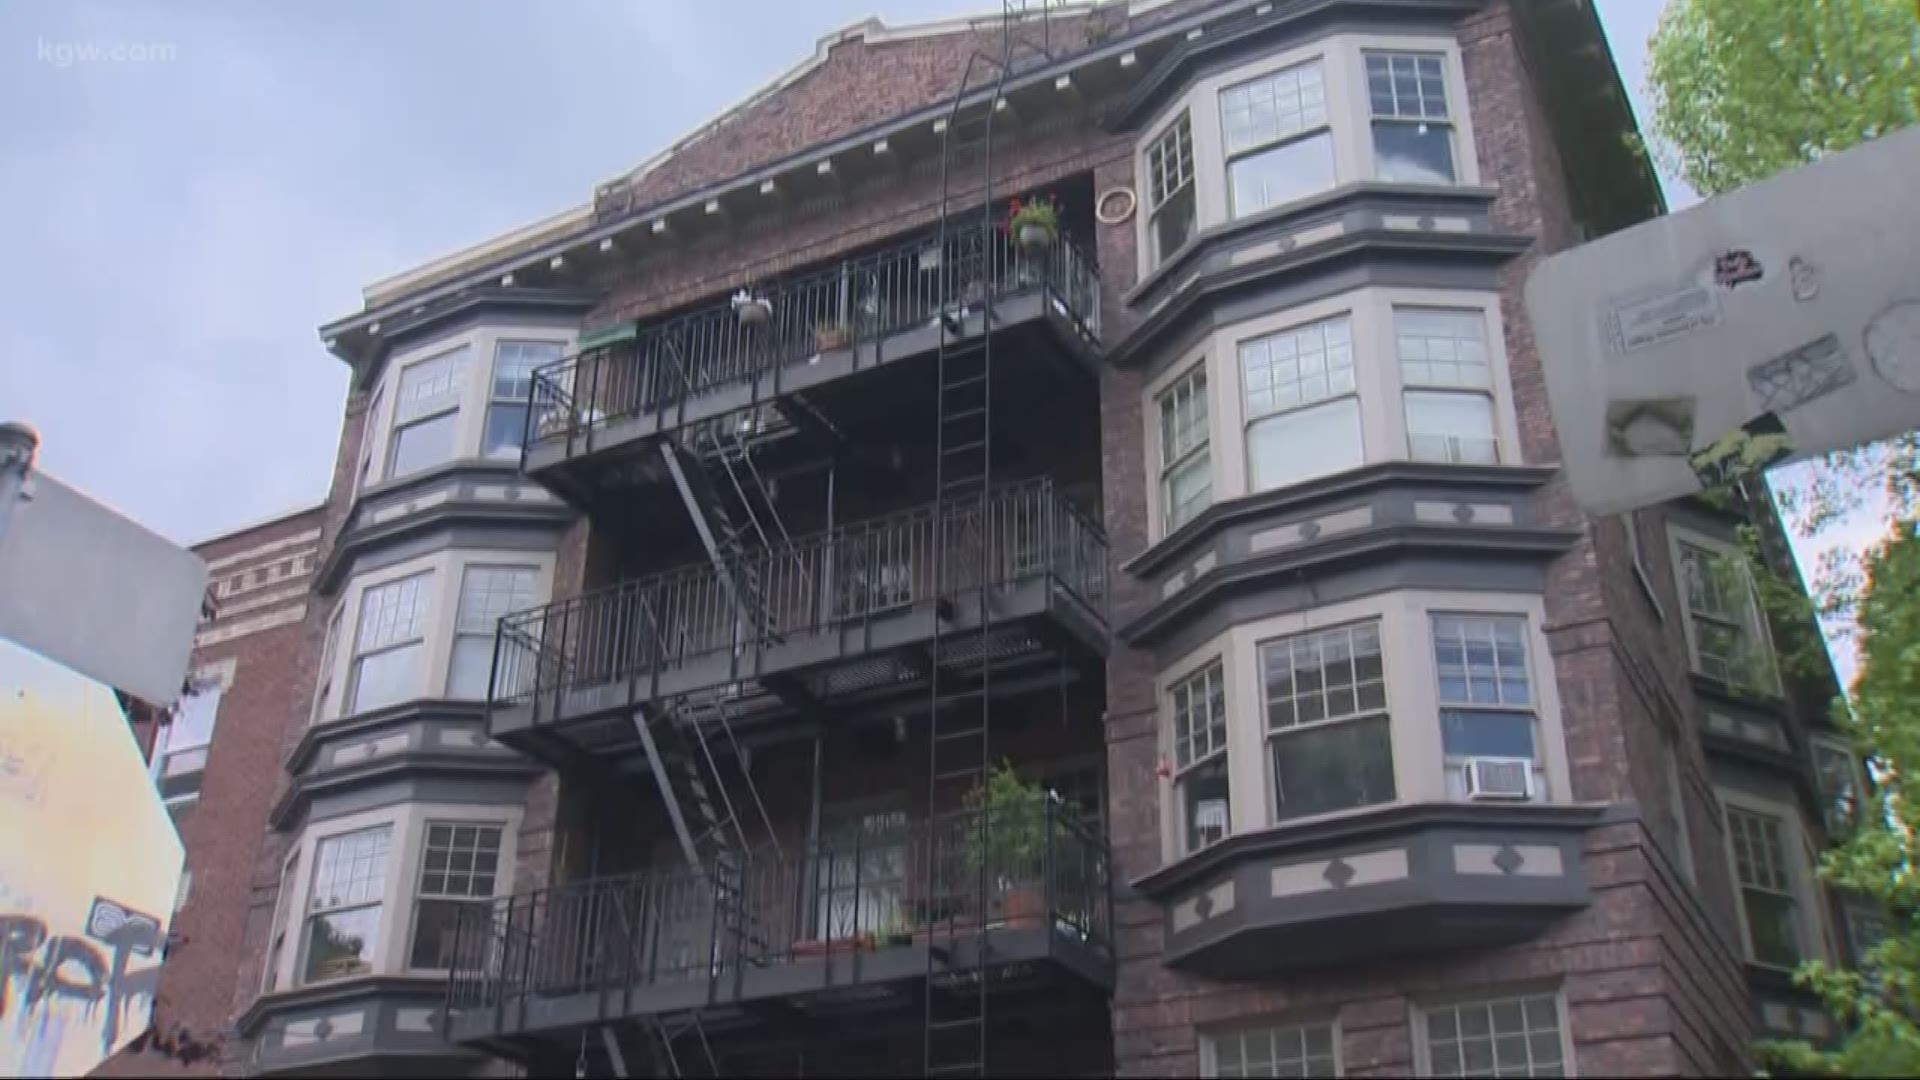 Portland approved a plan for upgrading older brick buildings.